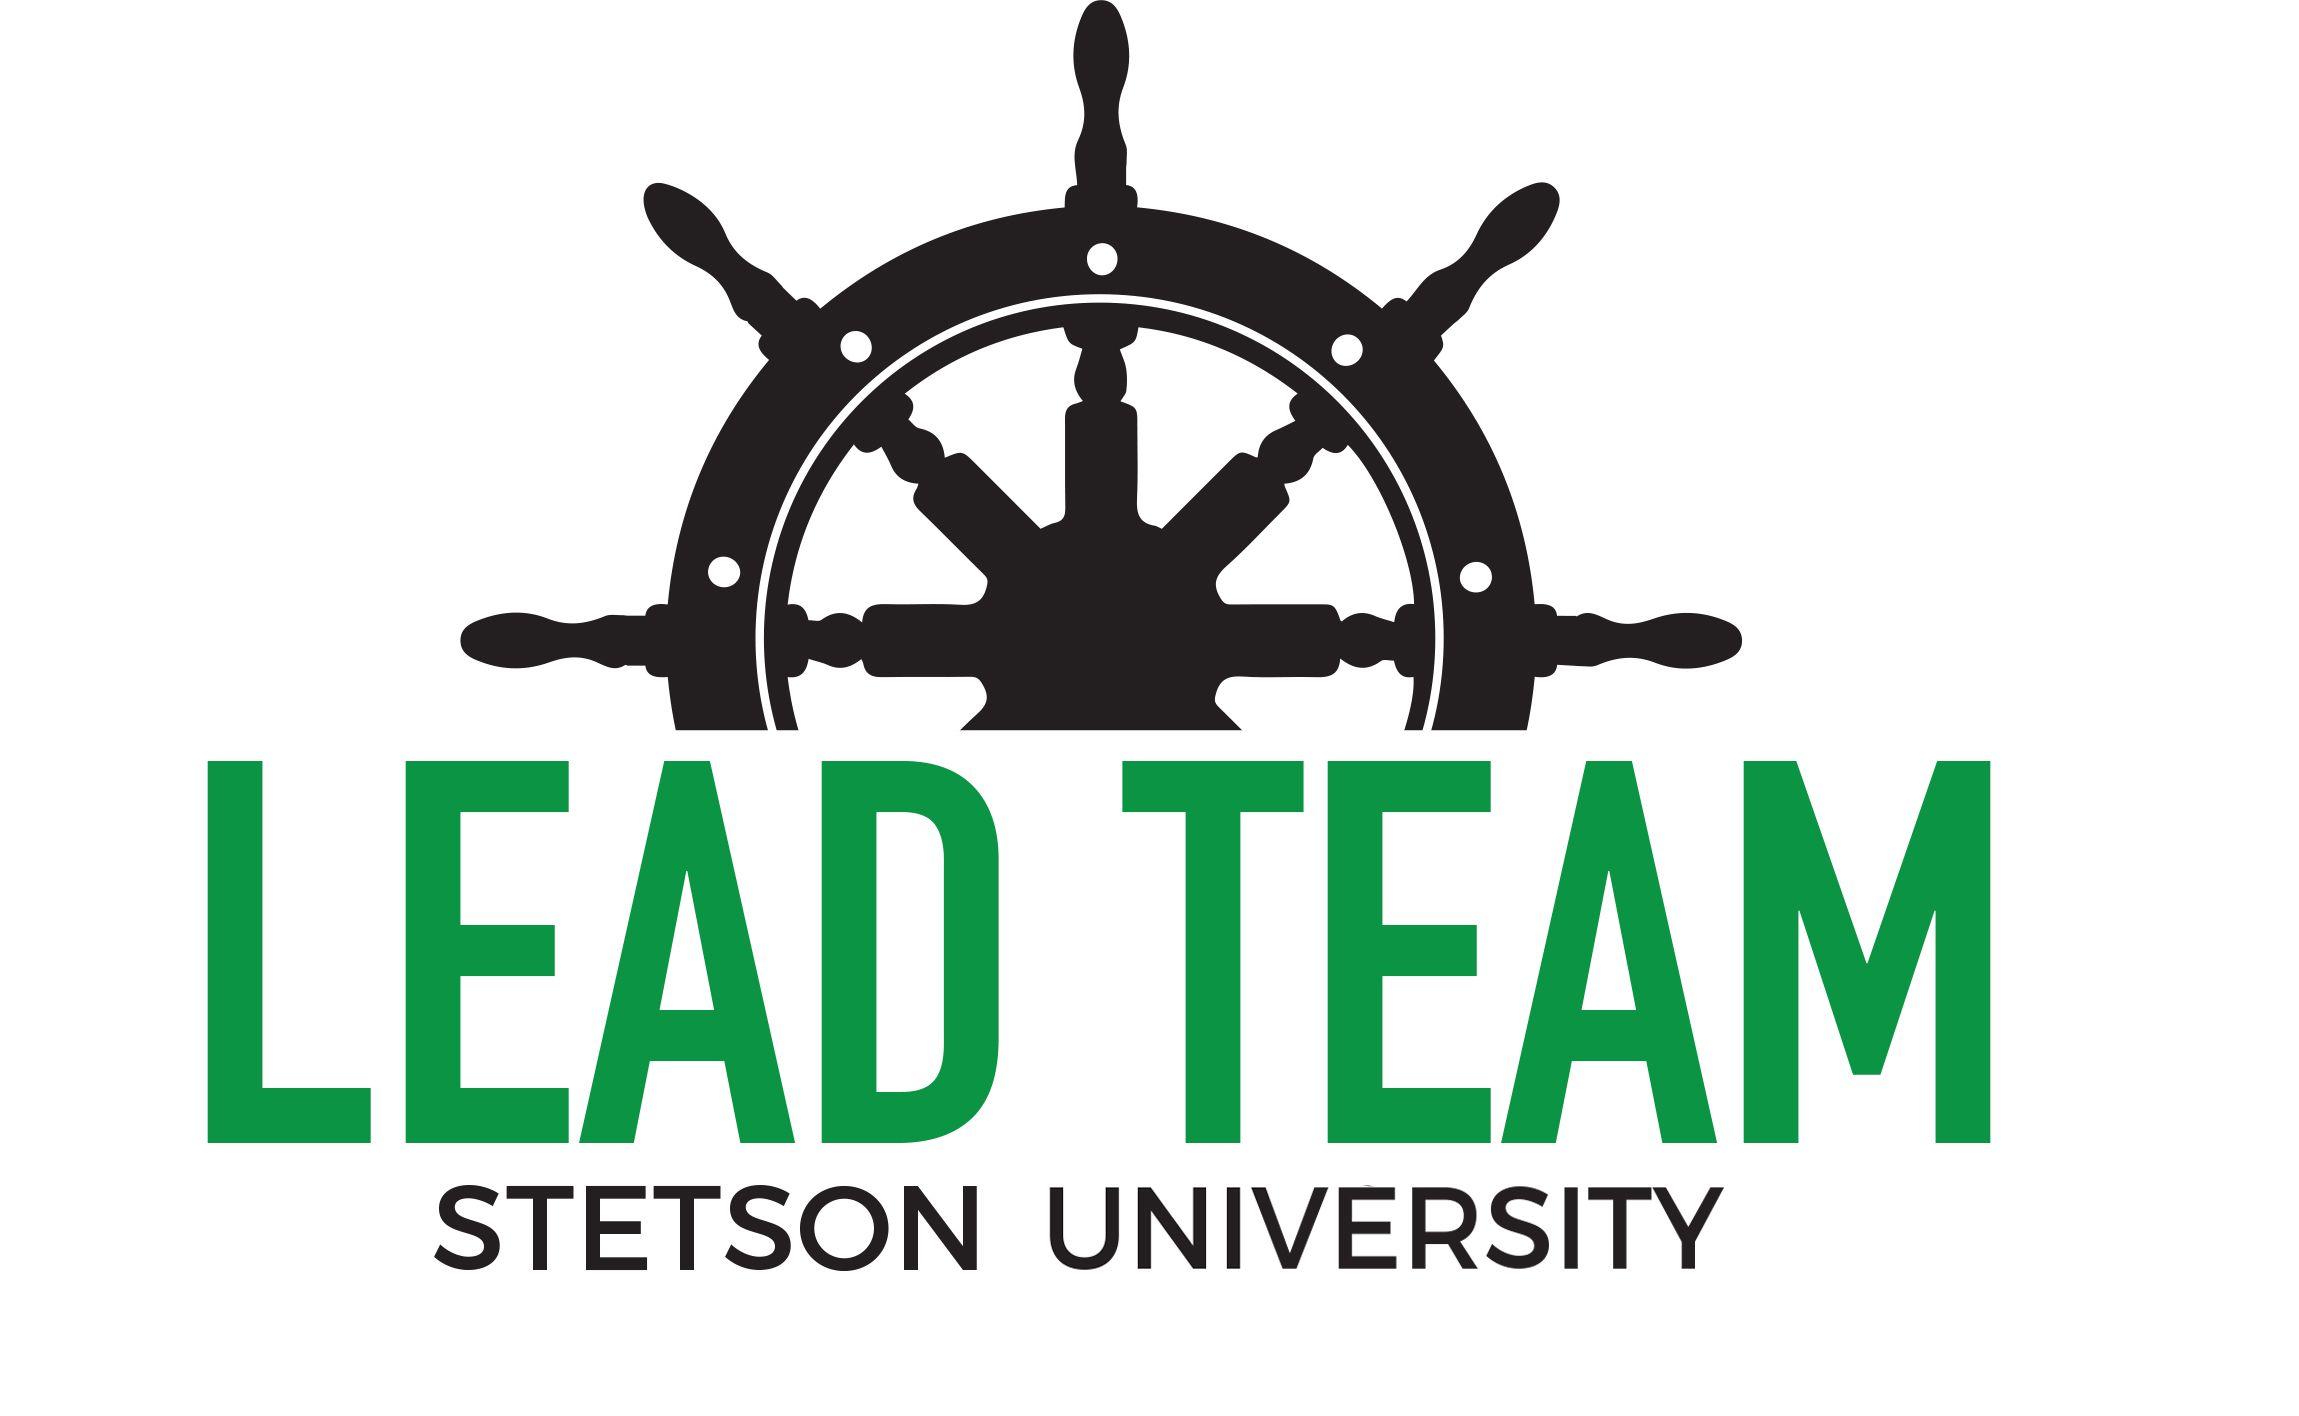 Stetson Logo - Leadership Development - Student Development and Campus Vibrancy ...